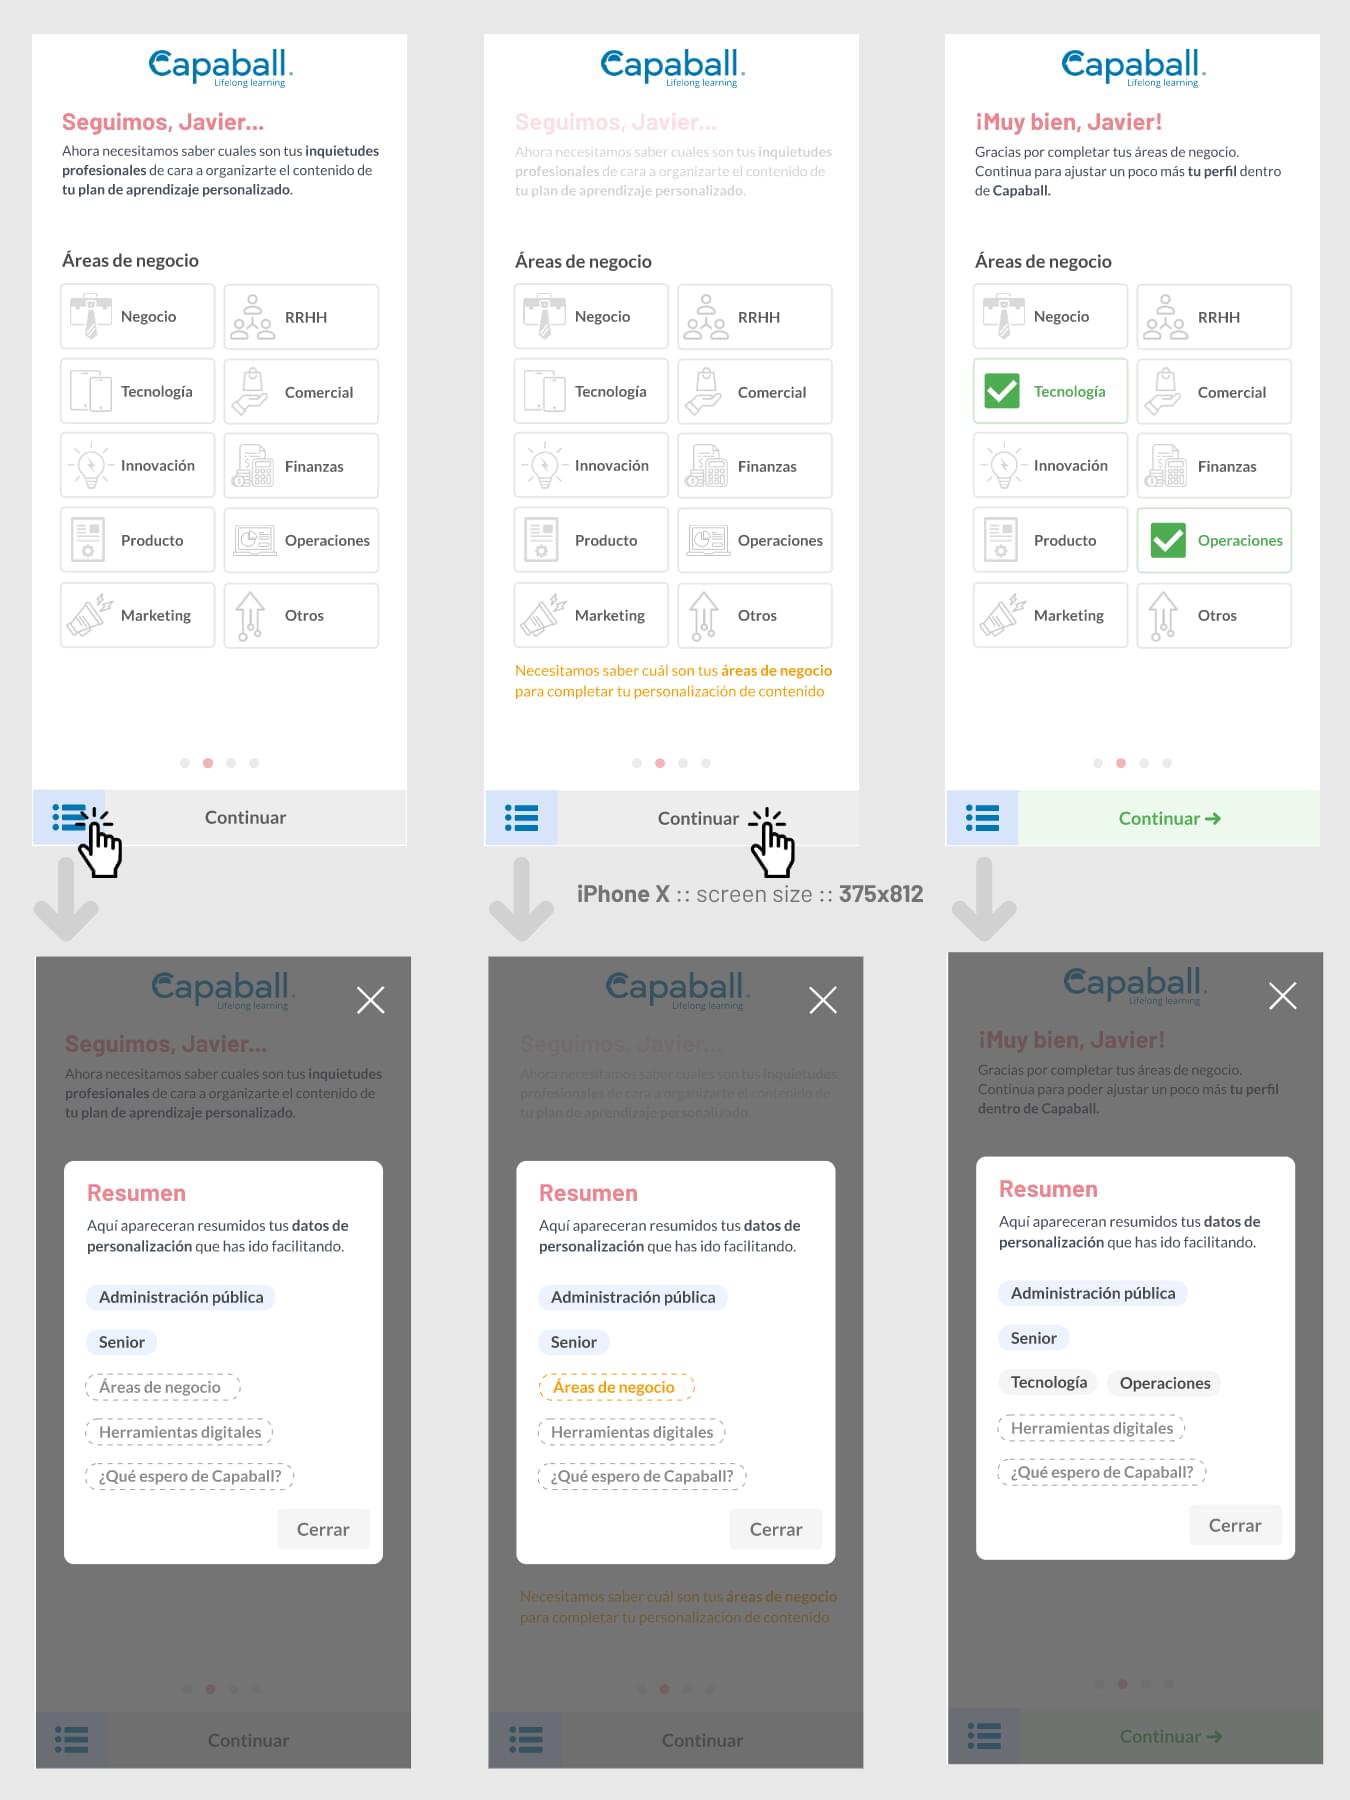 Capaball´s webapp survey in mobile devices by Javier lorenzo Fdez (@jalofernandez)